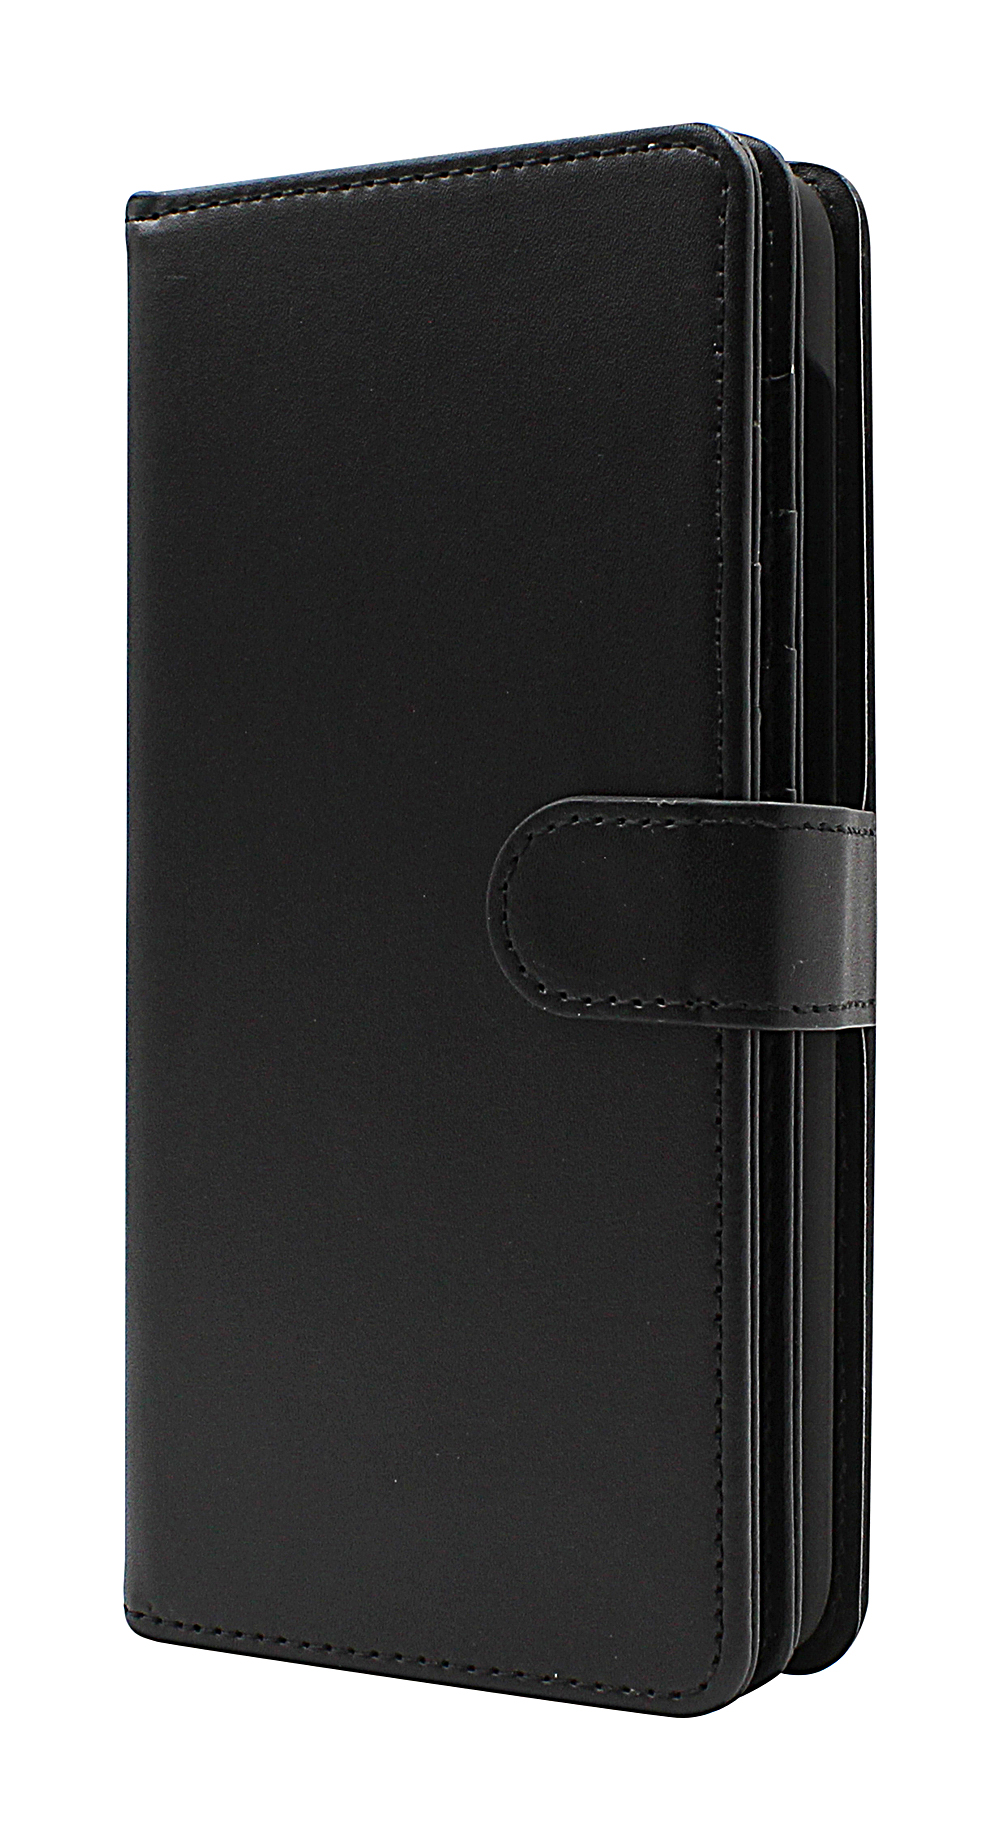 Skimblocker XL Magnet Wallet Motorola Moto E32s